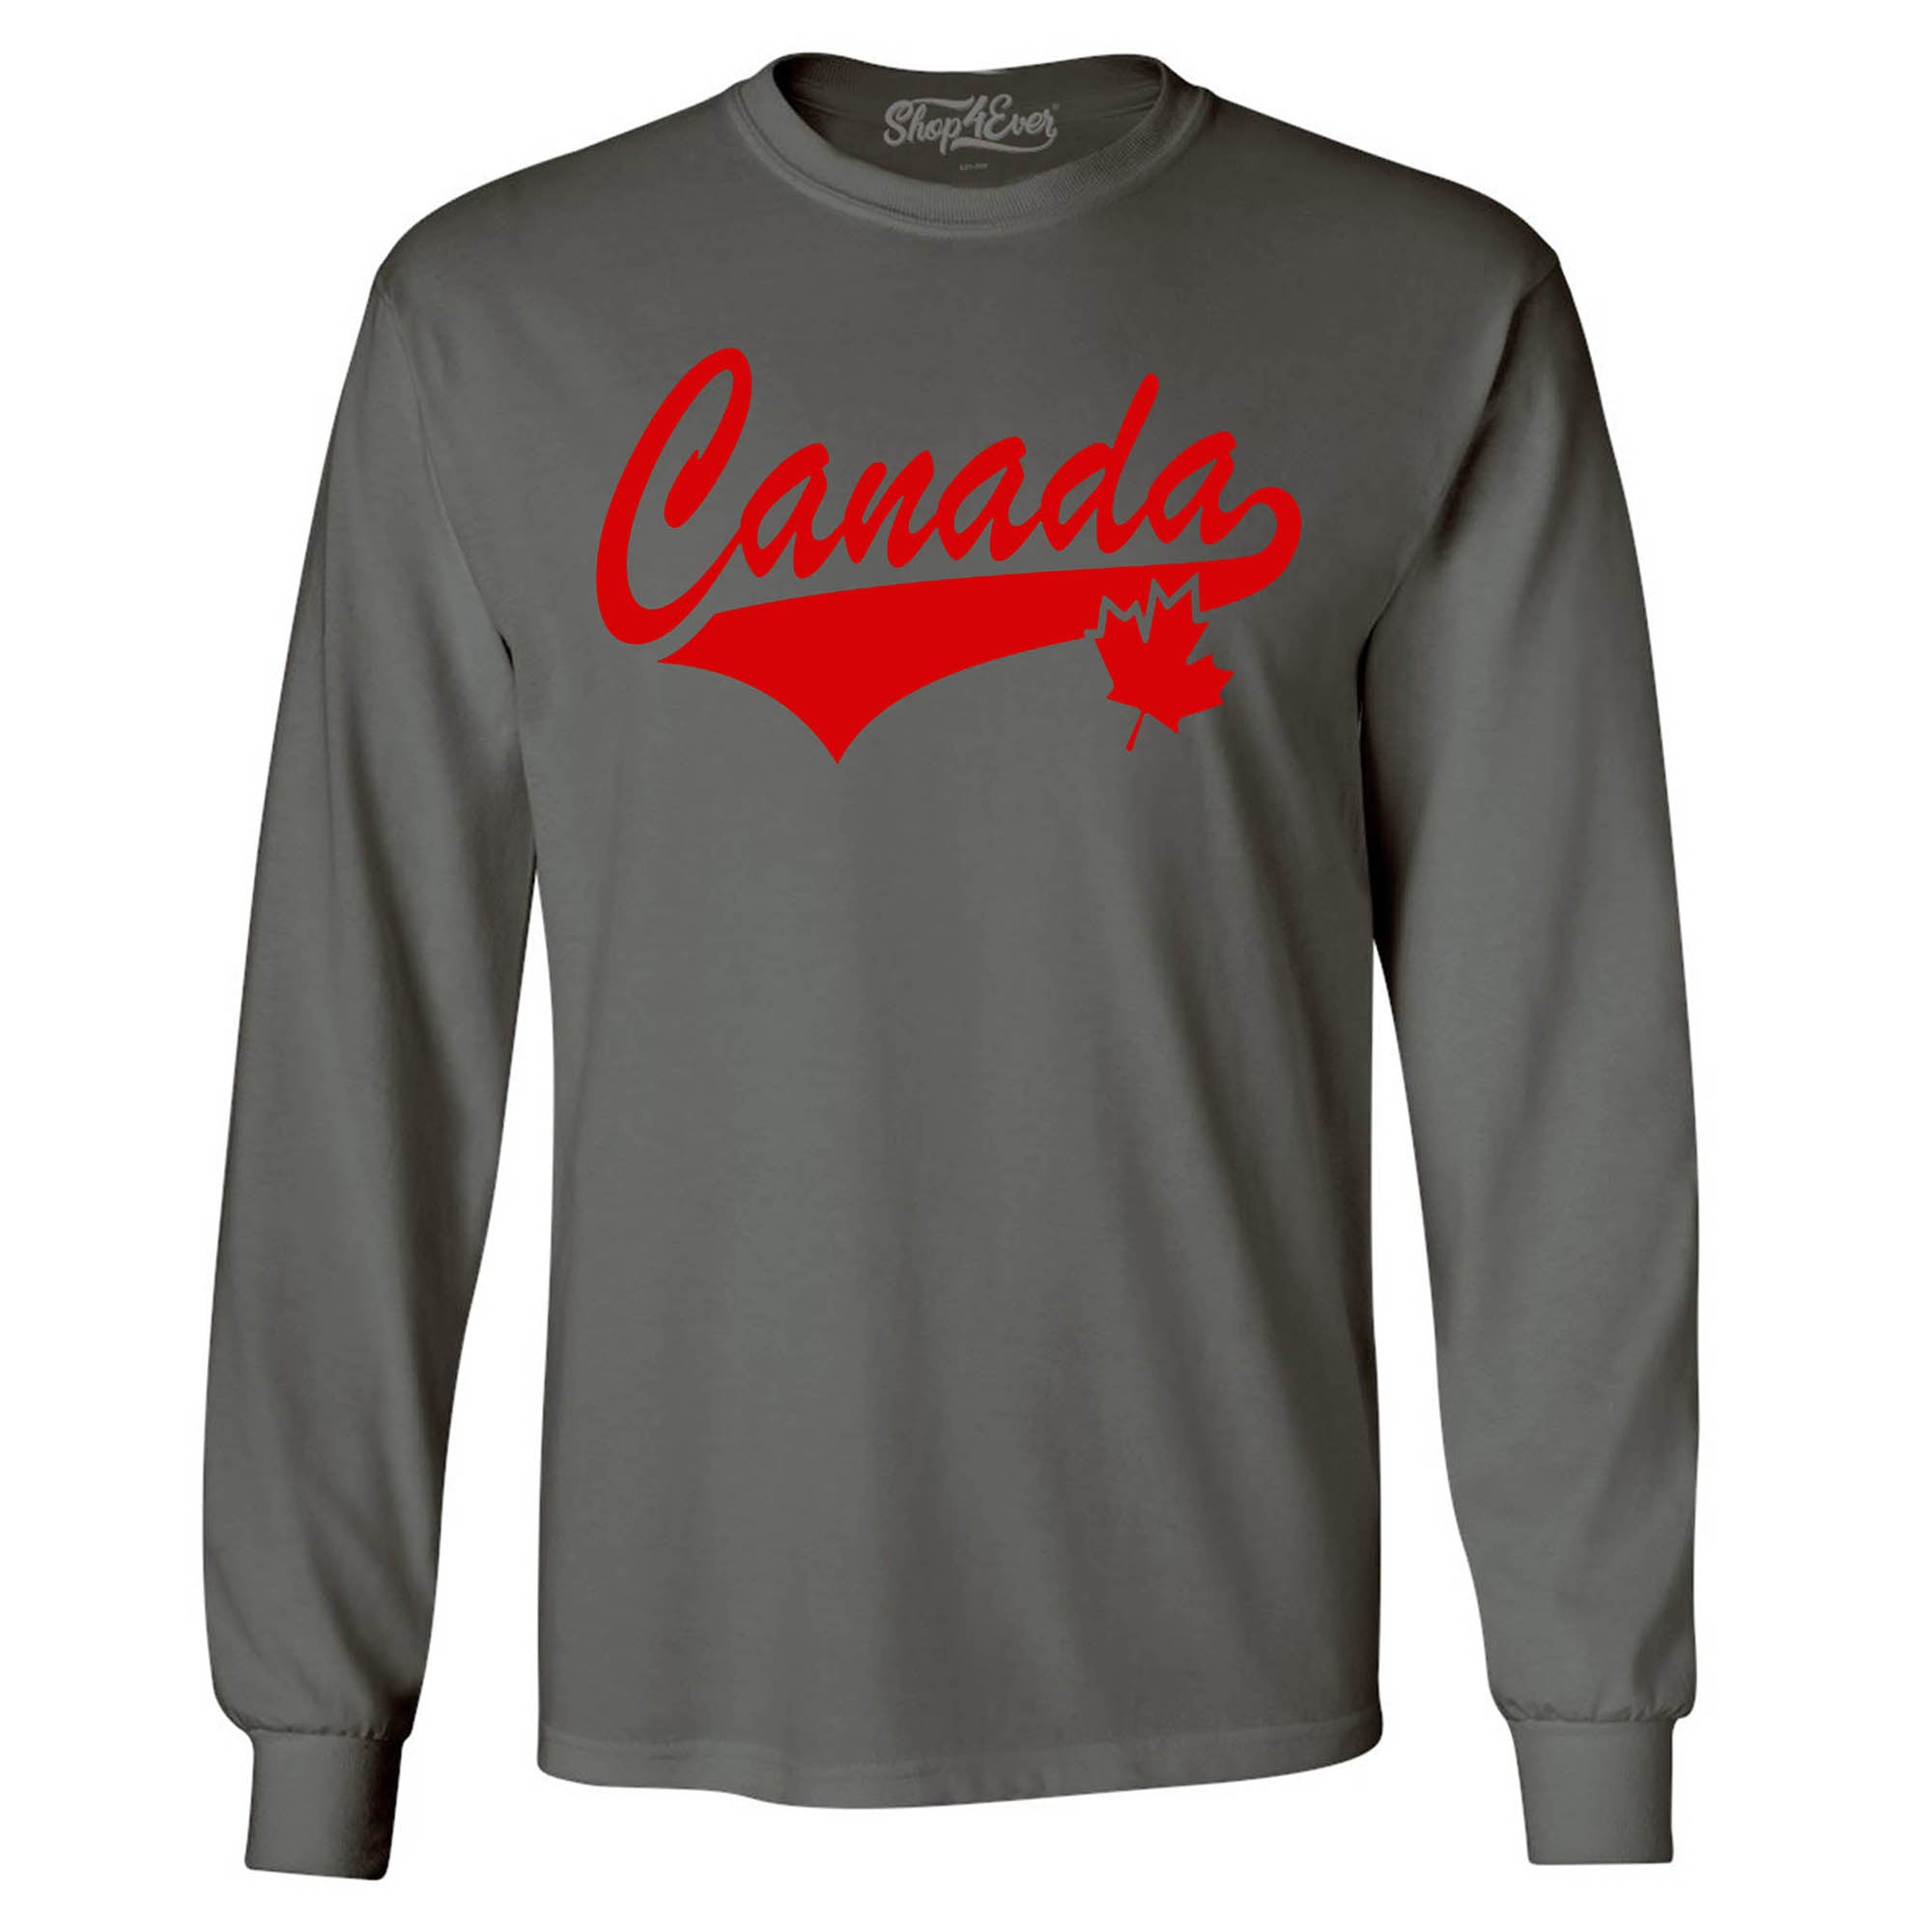 Canada Red Men's Long Sleeve Shirt